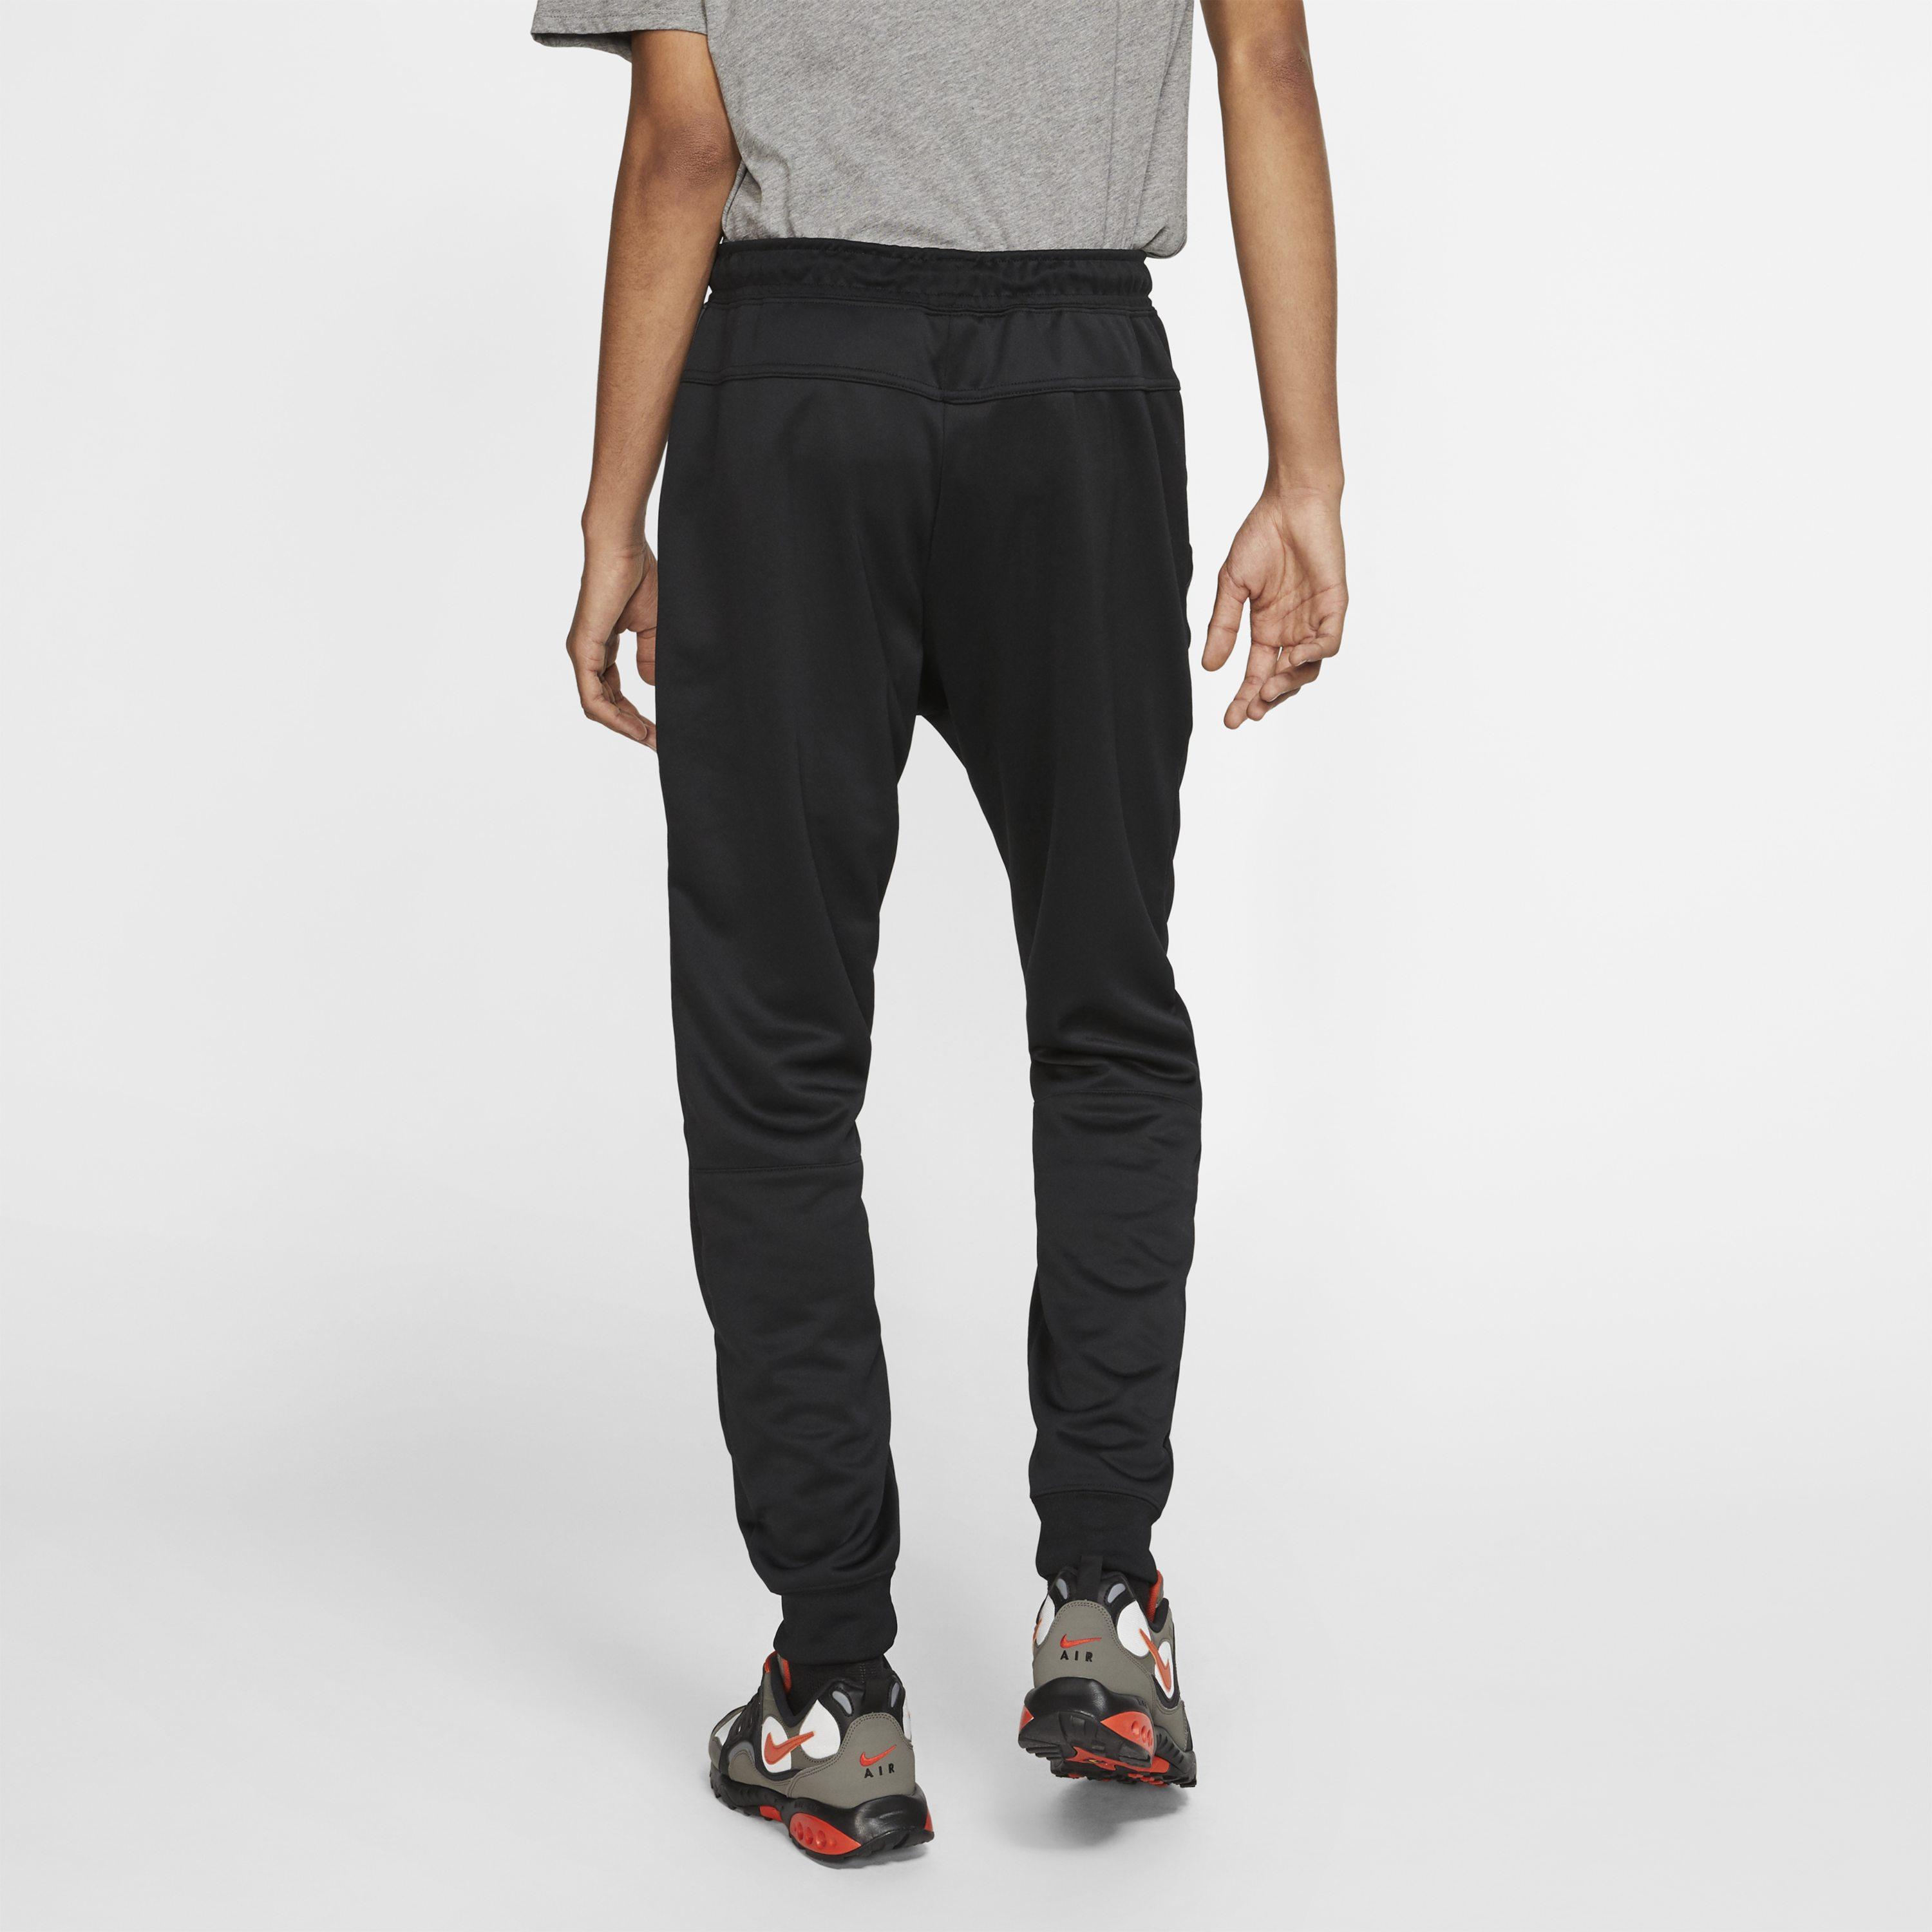 Nike Sportswear Air Max Joggers in Black for Men - Lyst